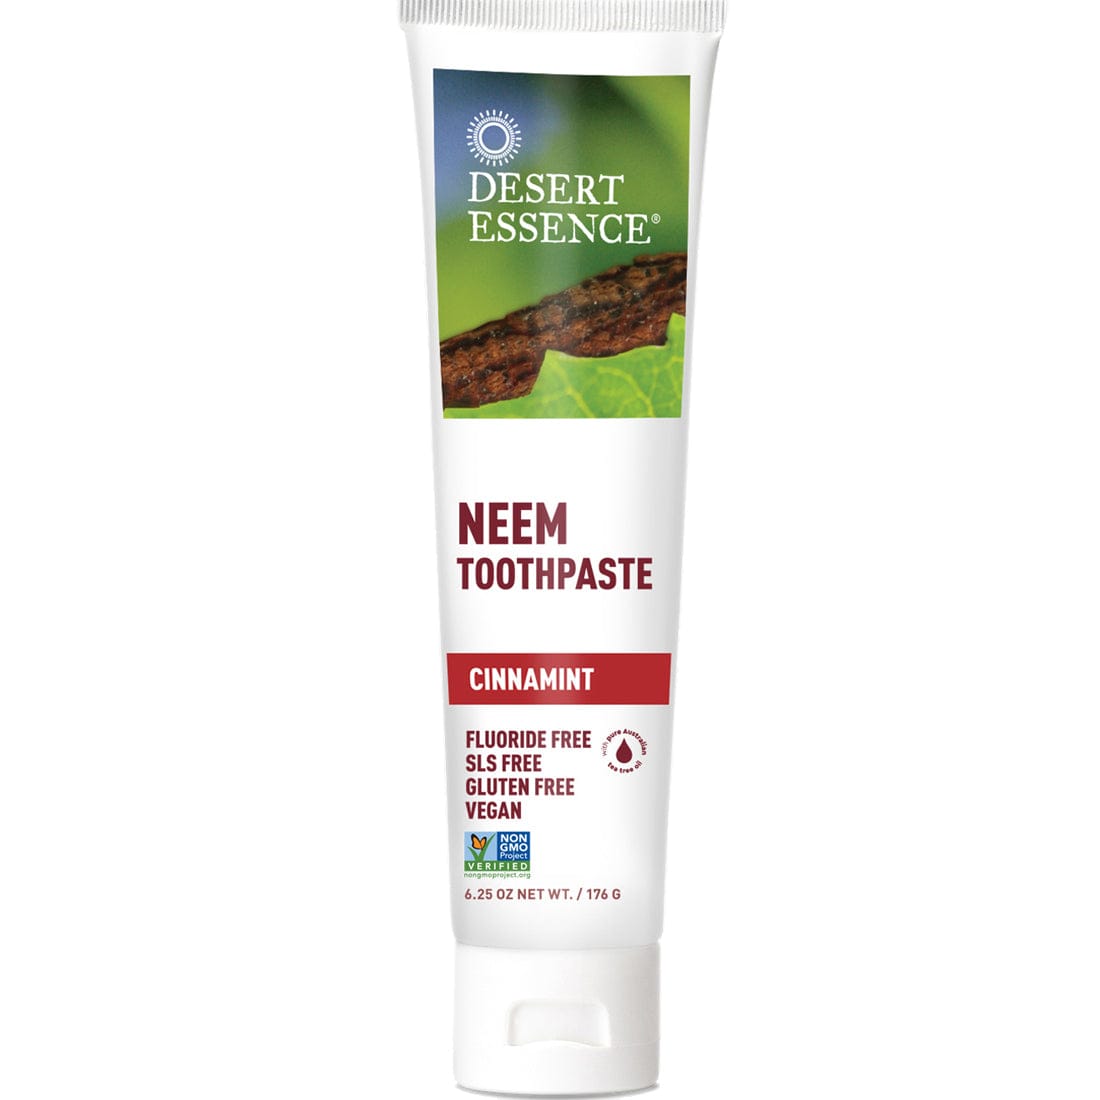 Desert Essence Neem Toothpaste, 176g